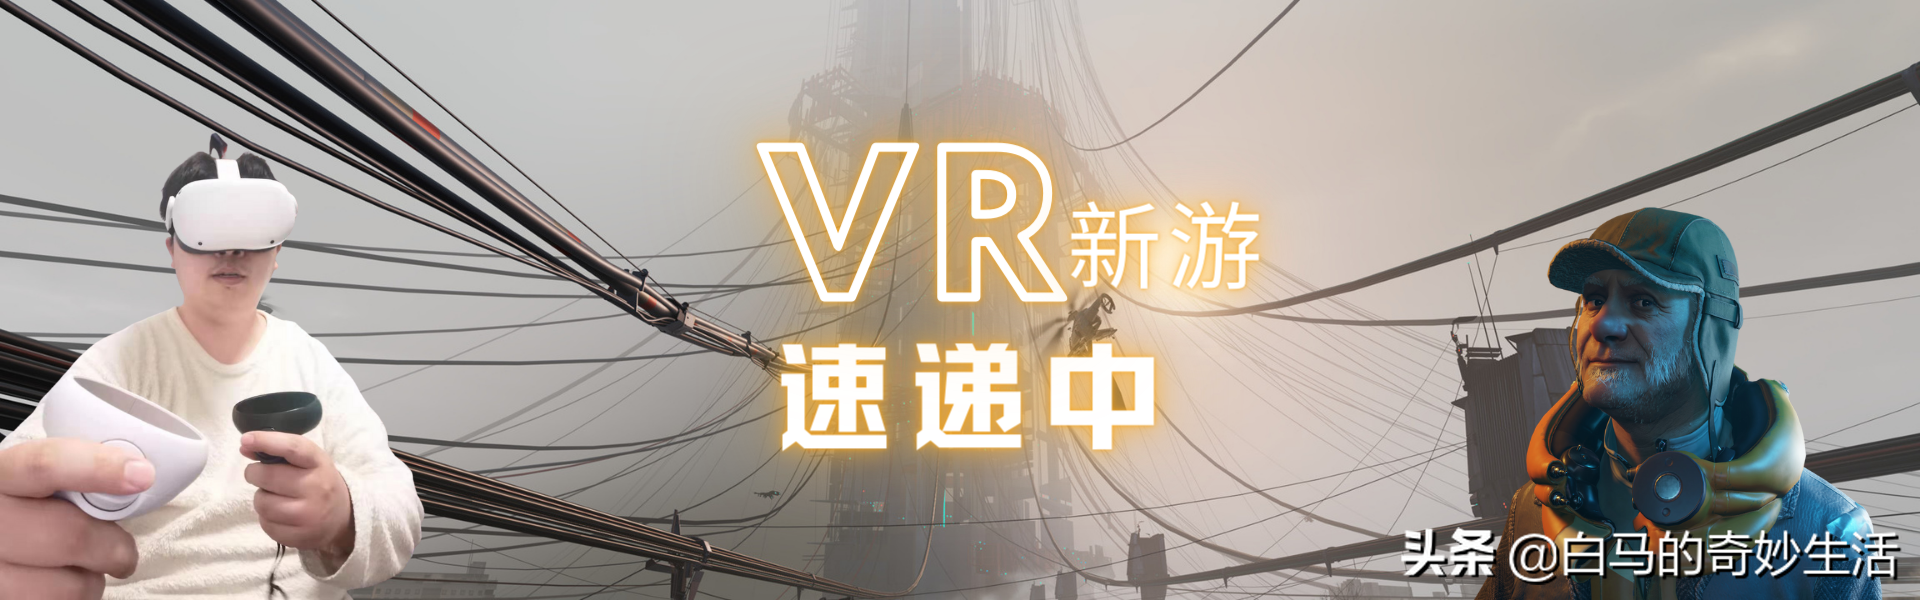 VR游戏中最流行的王者-节奏光剑(Beat Saber)